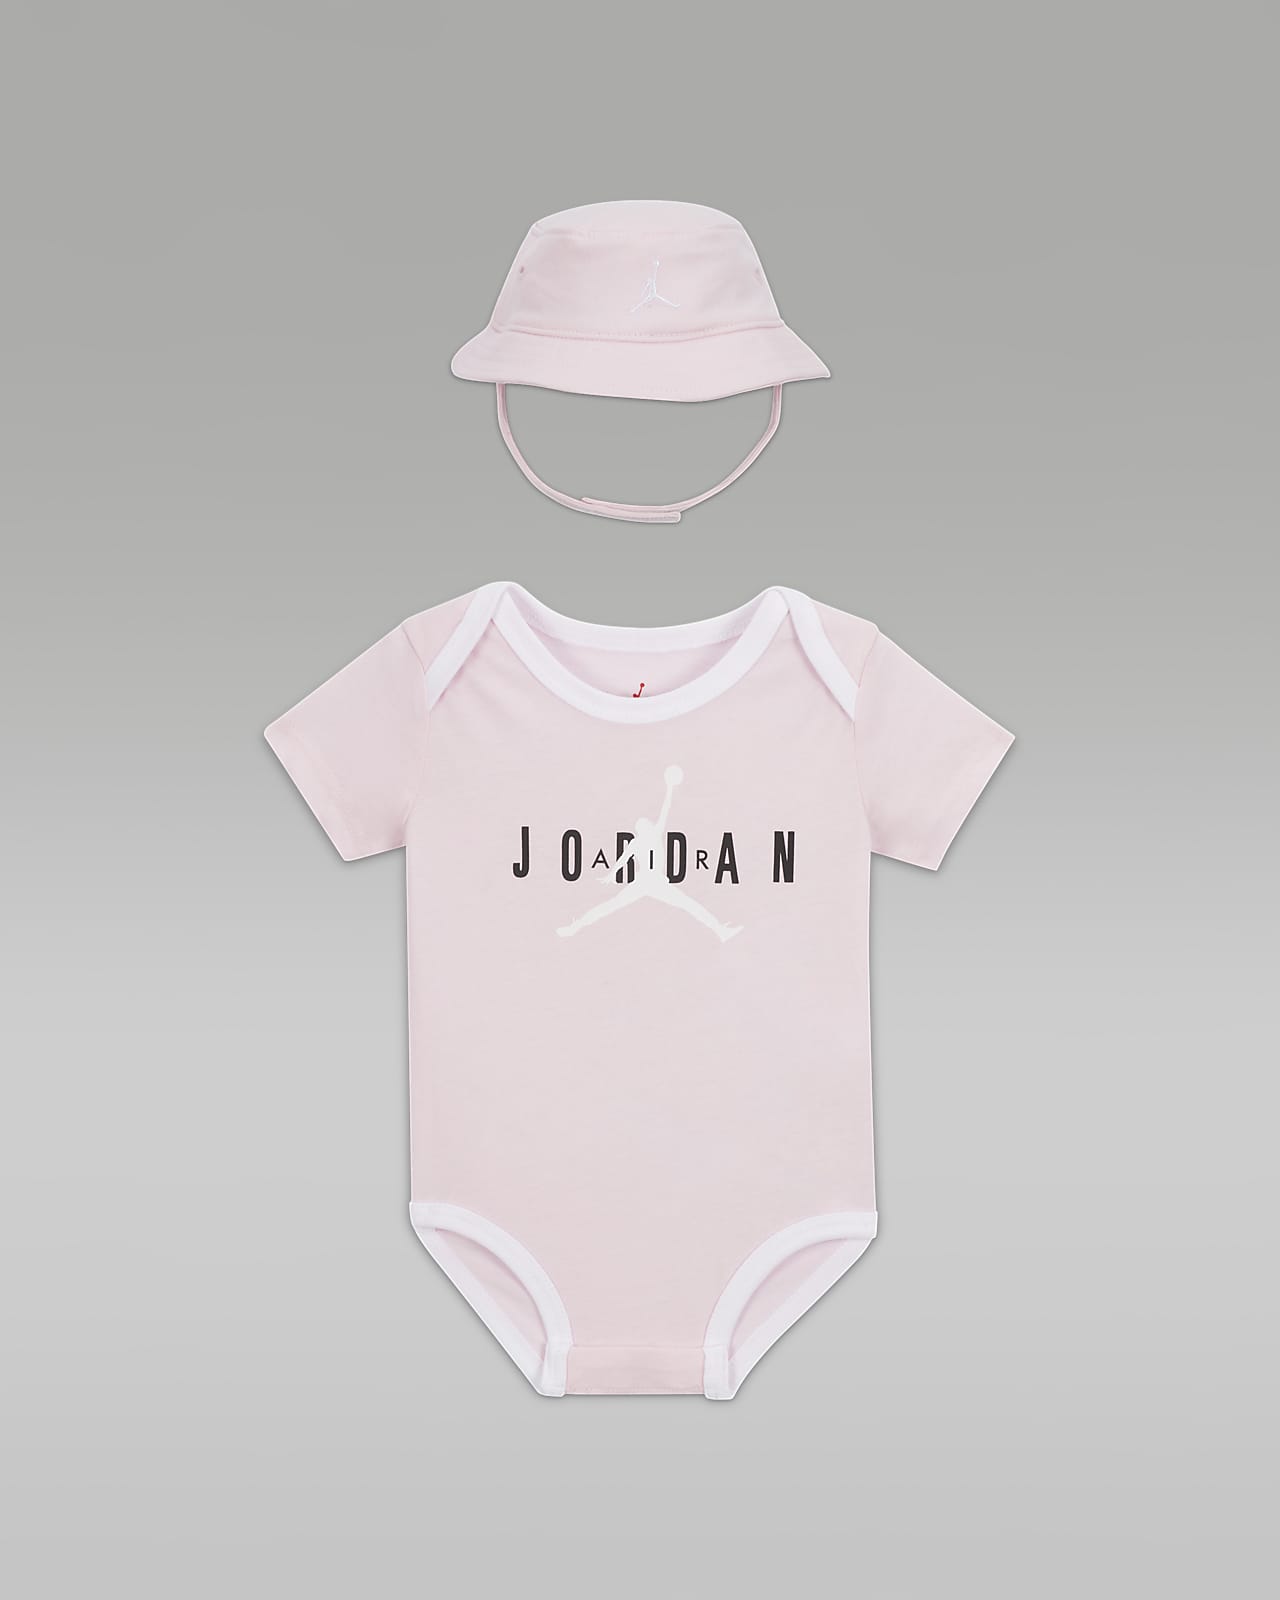 Sada kloboučku a kojeneckého body Jordan Jumpman (0 –6 měsíců)